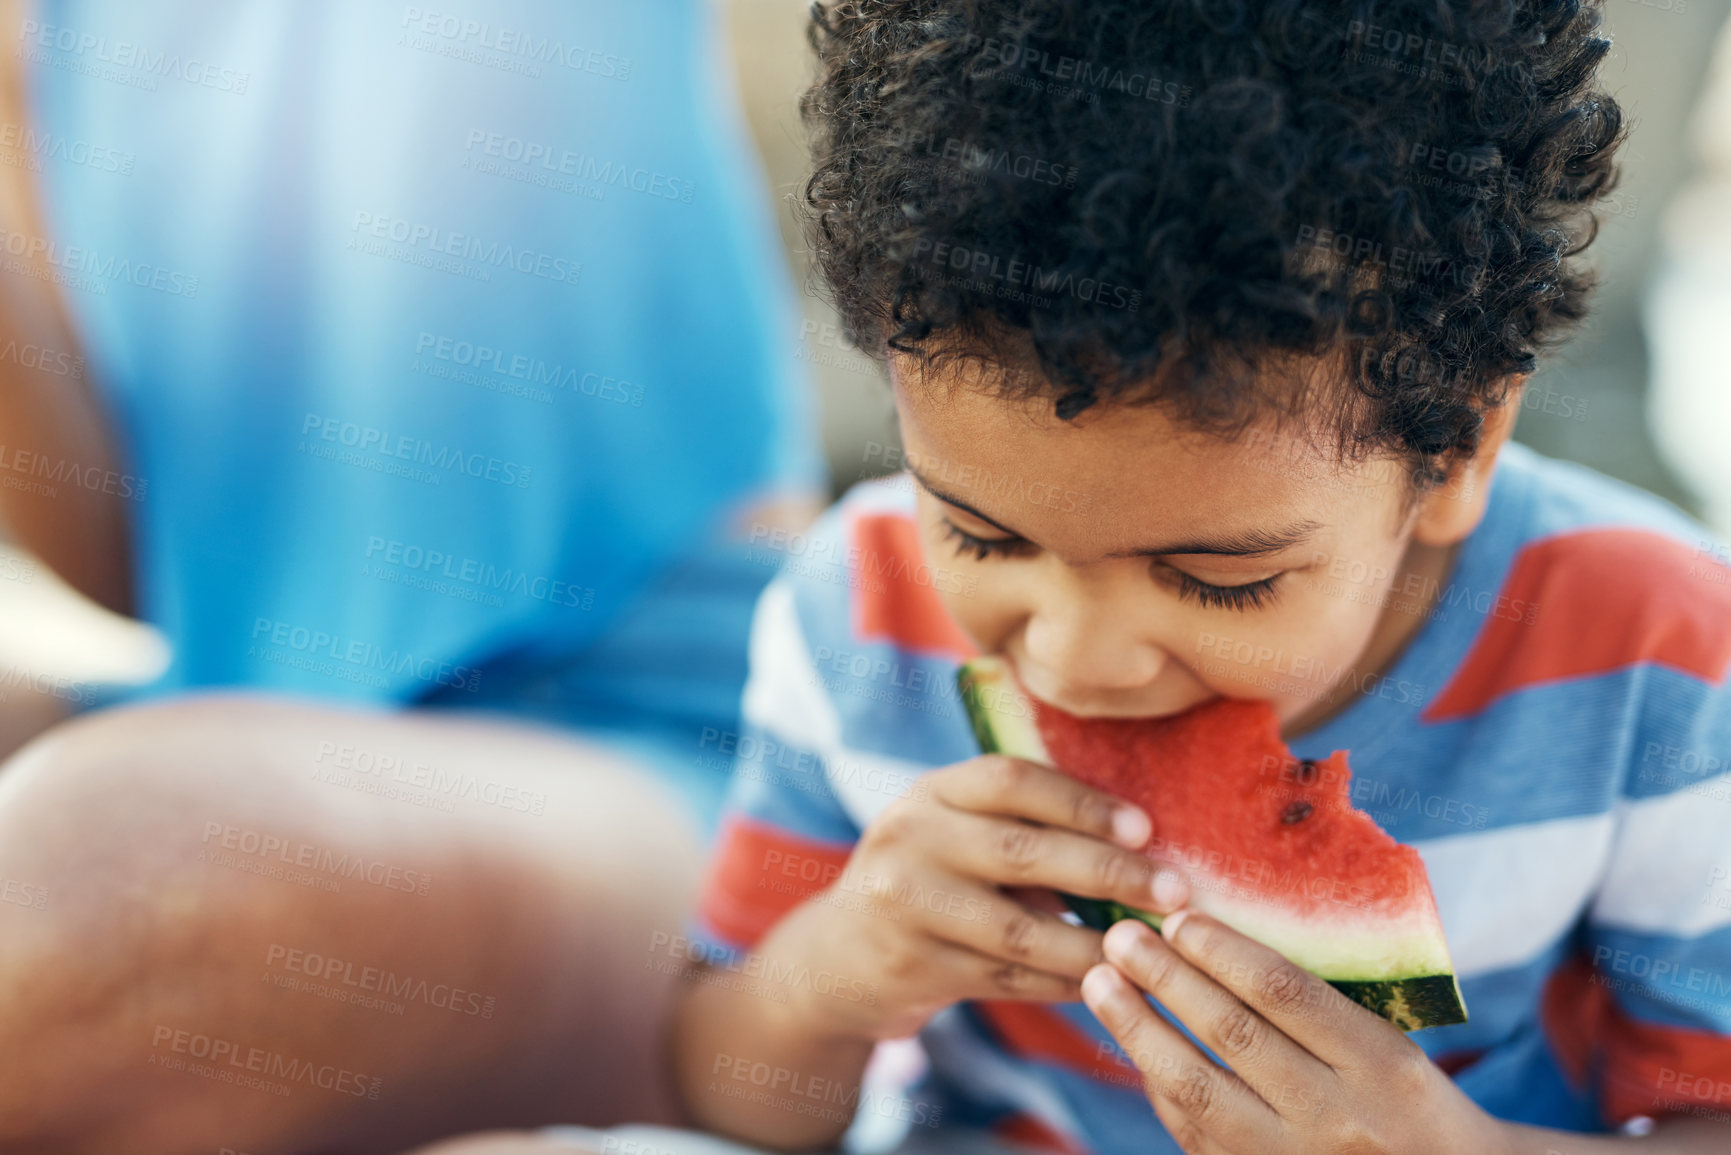 Buy stock photo Shot of a young boy enjoying a piece of watermelon outside